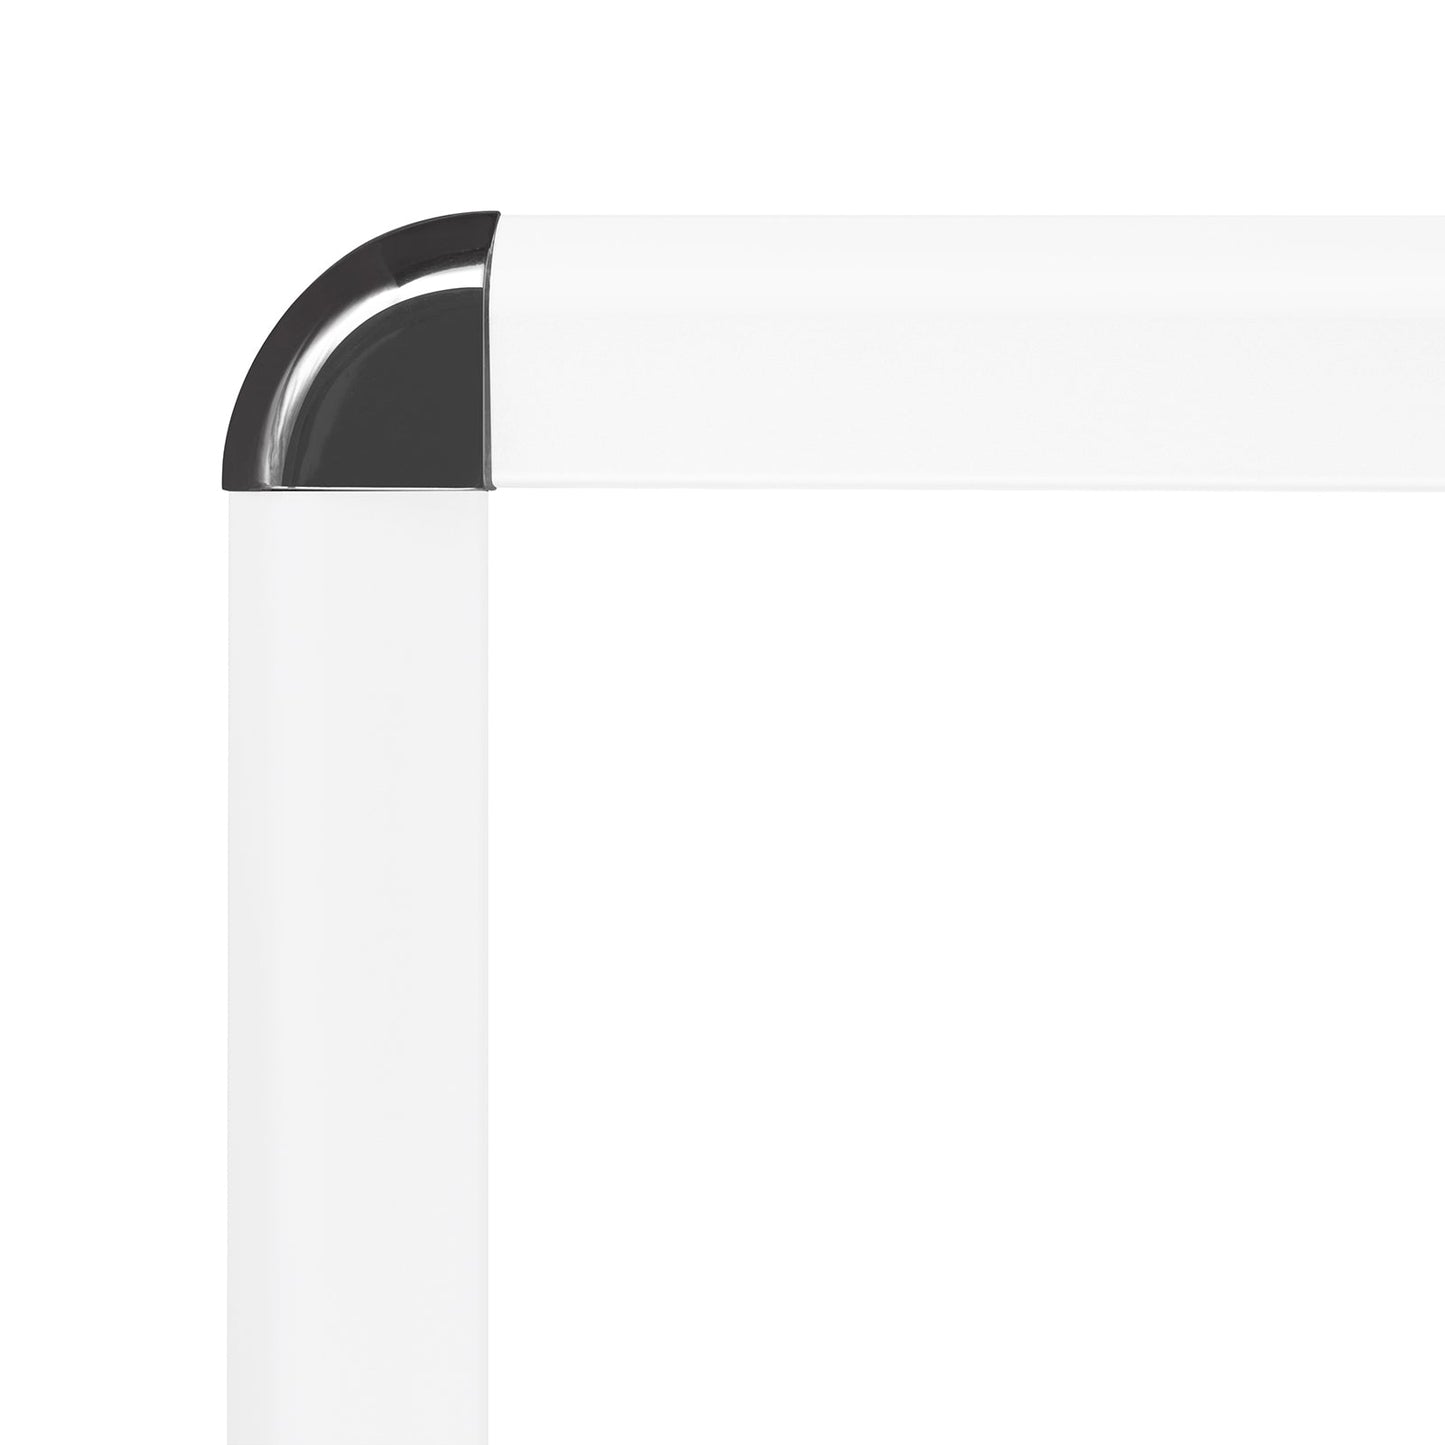 22x28 White SnapeZo® Sidewalk Sign - 1.25" Profile - Snap Frames Direct